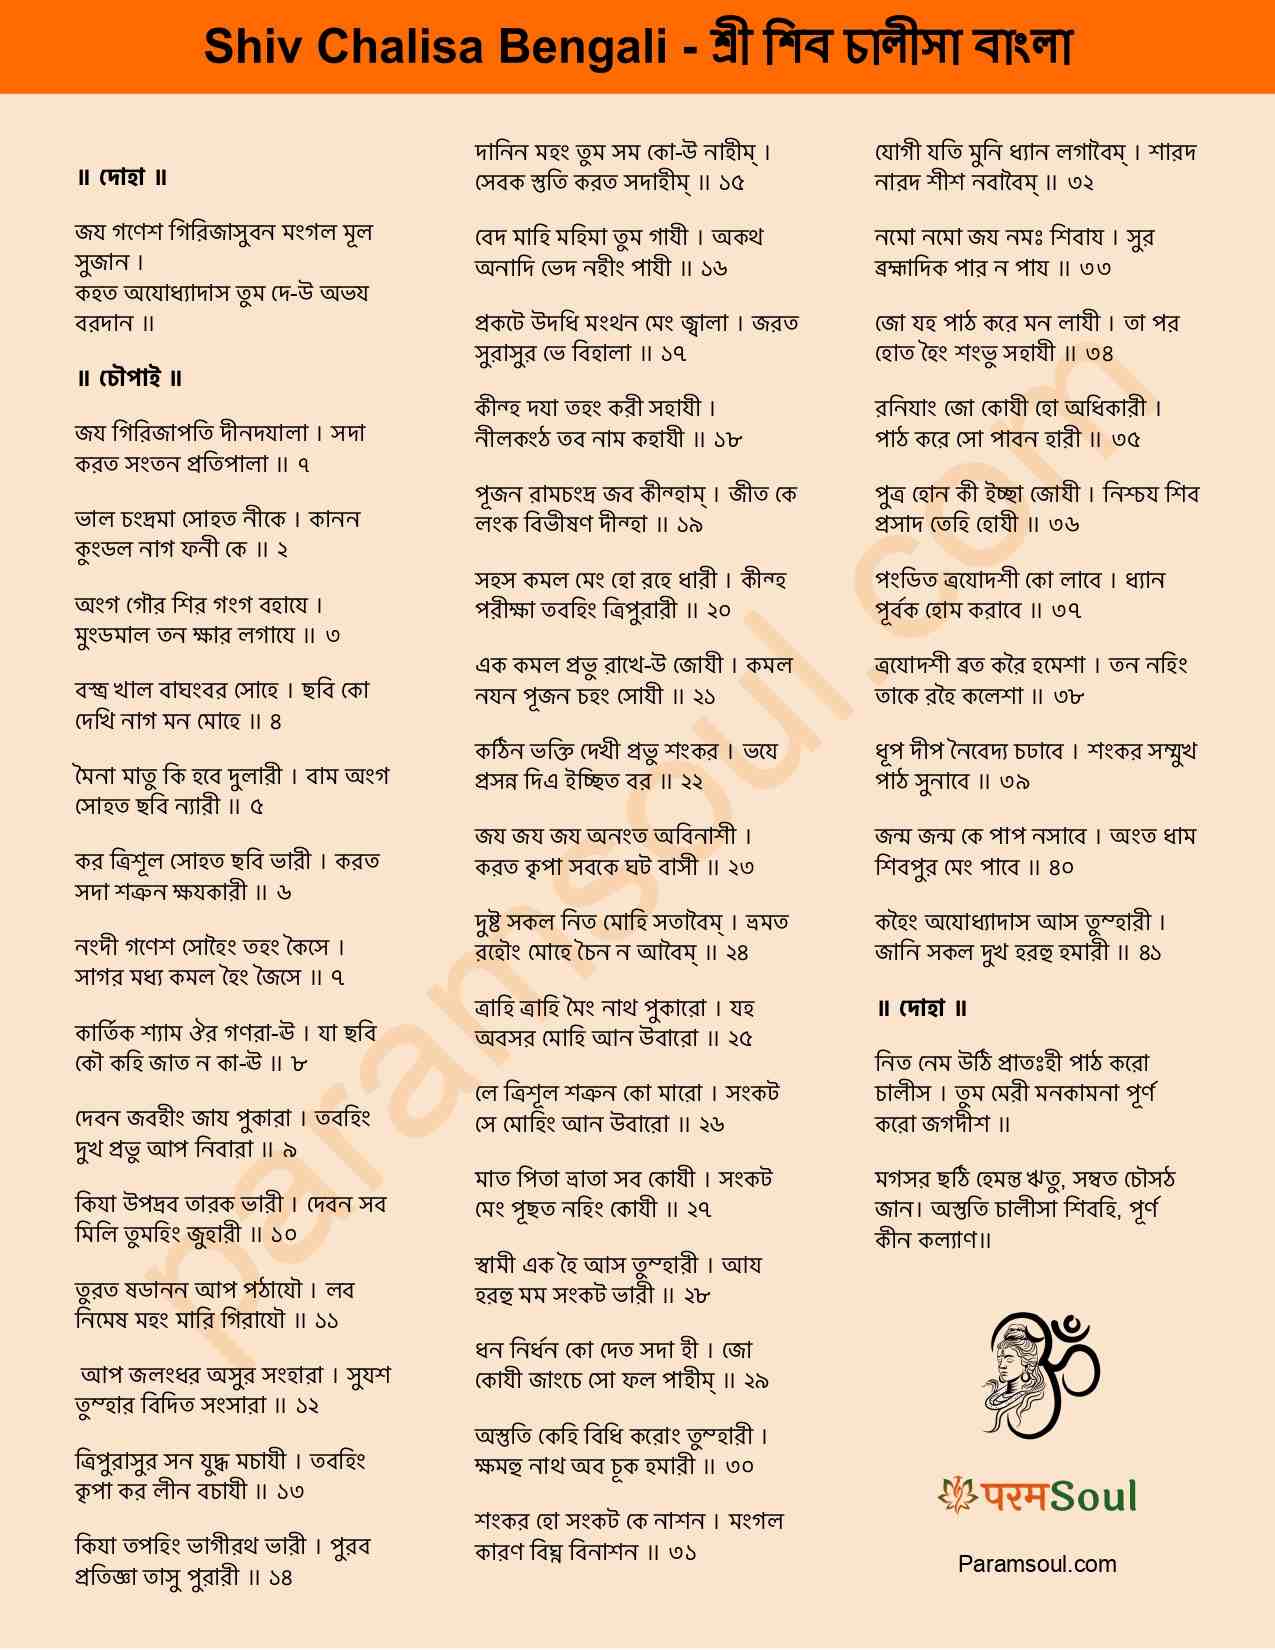 Shiv Chalisa Lyrics in Bengali Lyrics Image -  শিব চালীসা বাংলা পাঠ